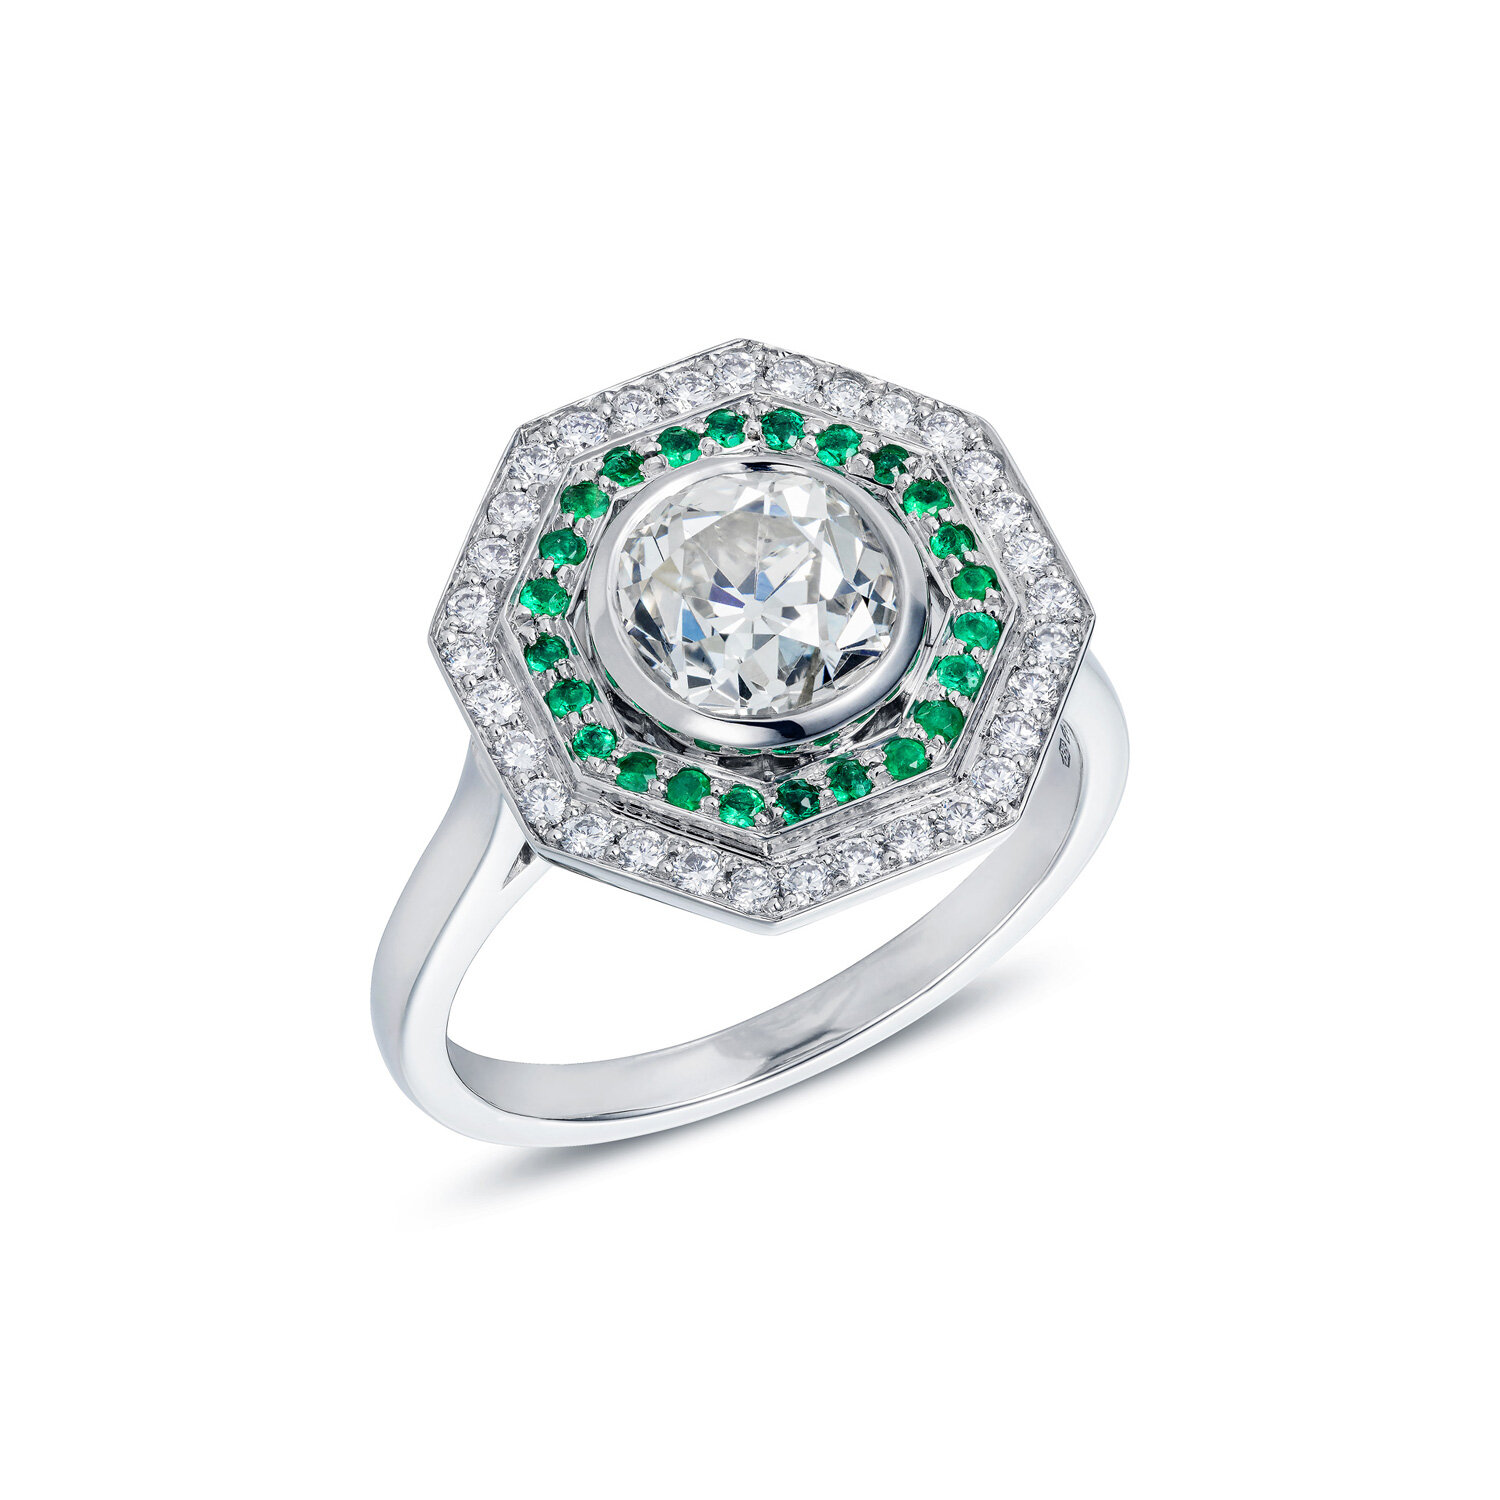 Diamond-and-emerald-target-engagement-ring-3.jpg